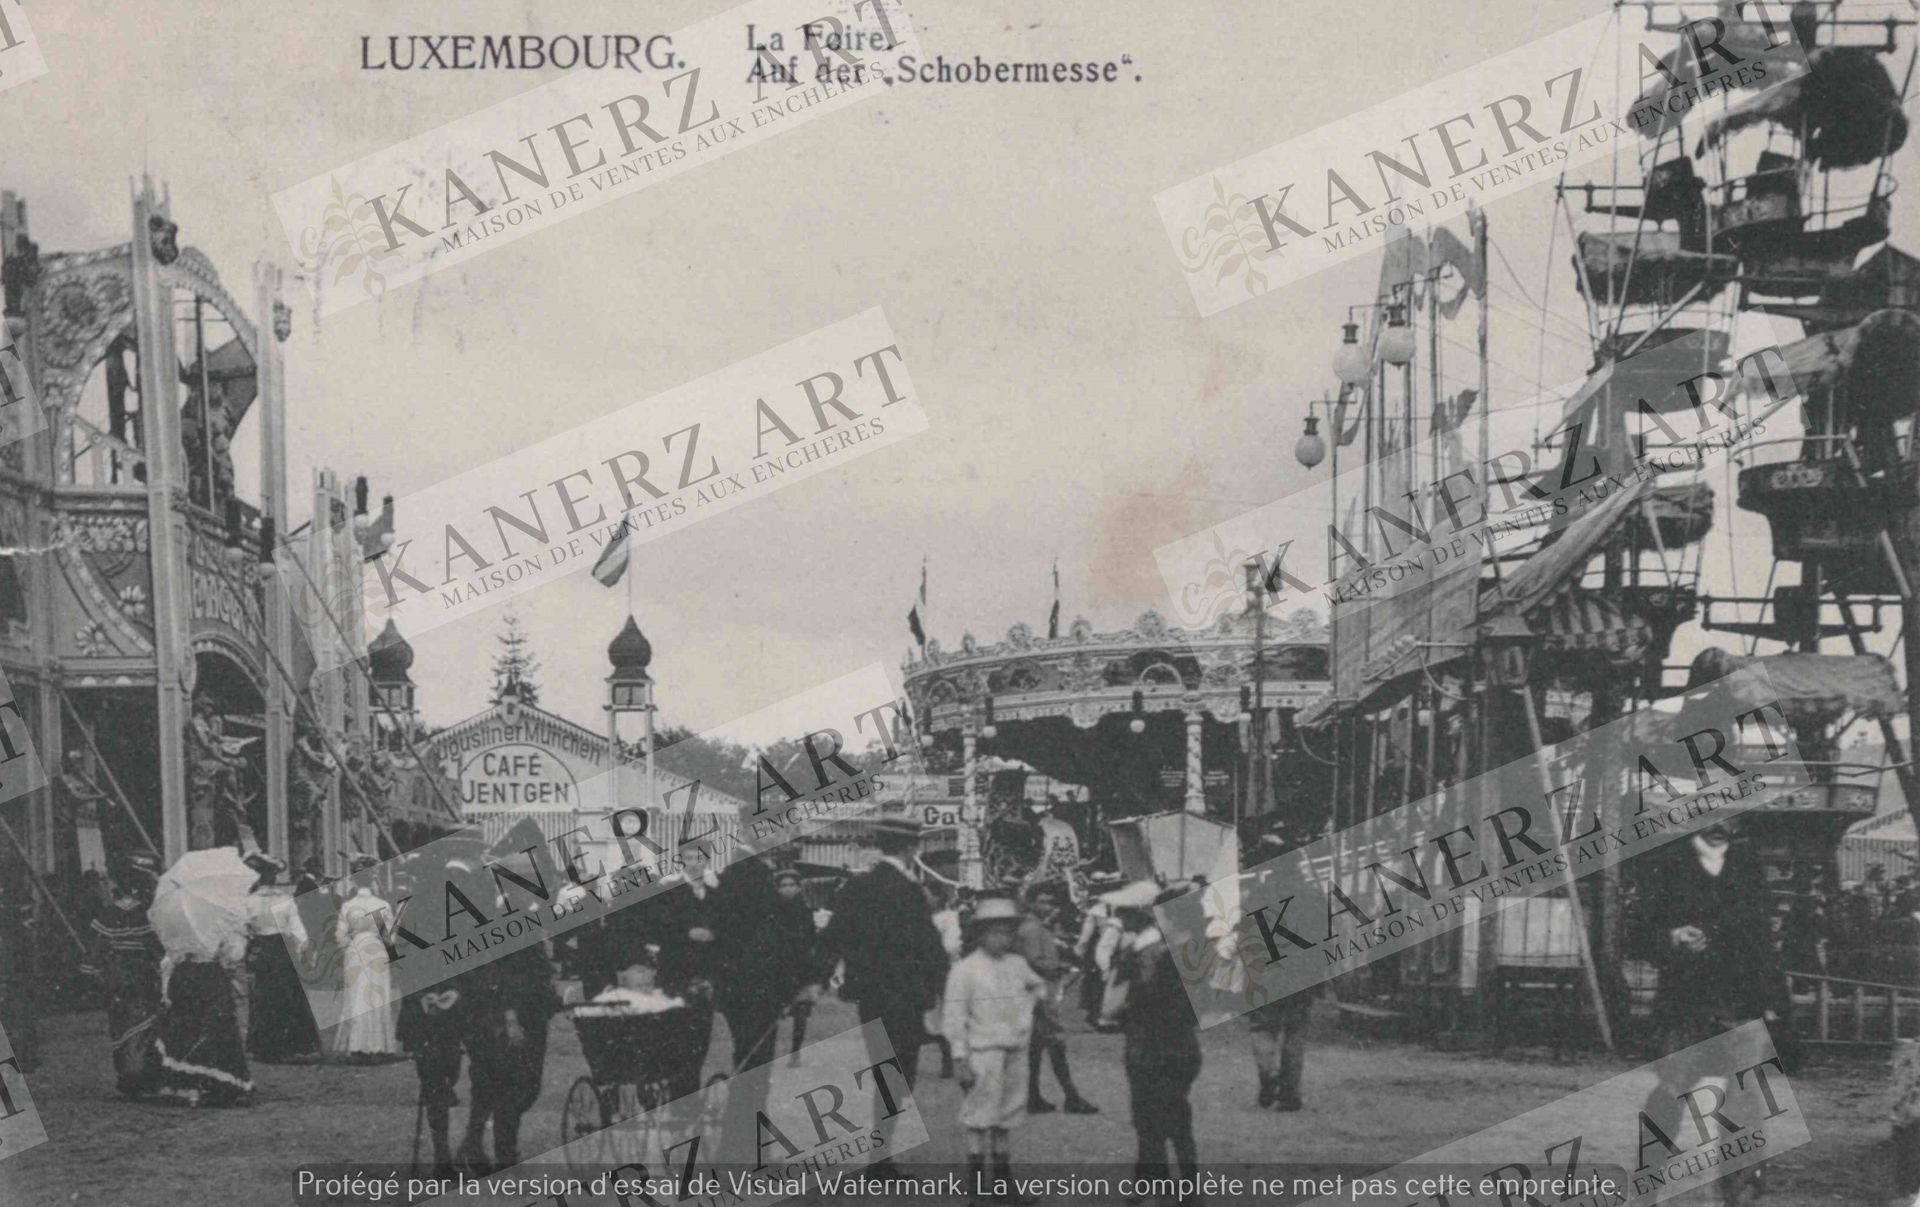 Null (UFFICIALE/SCHOBERMESSE) Cartolina della Schueberfouer "La Foire. Auf der S&hellip;